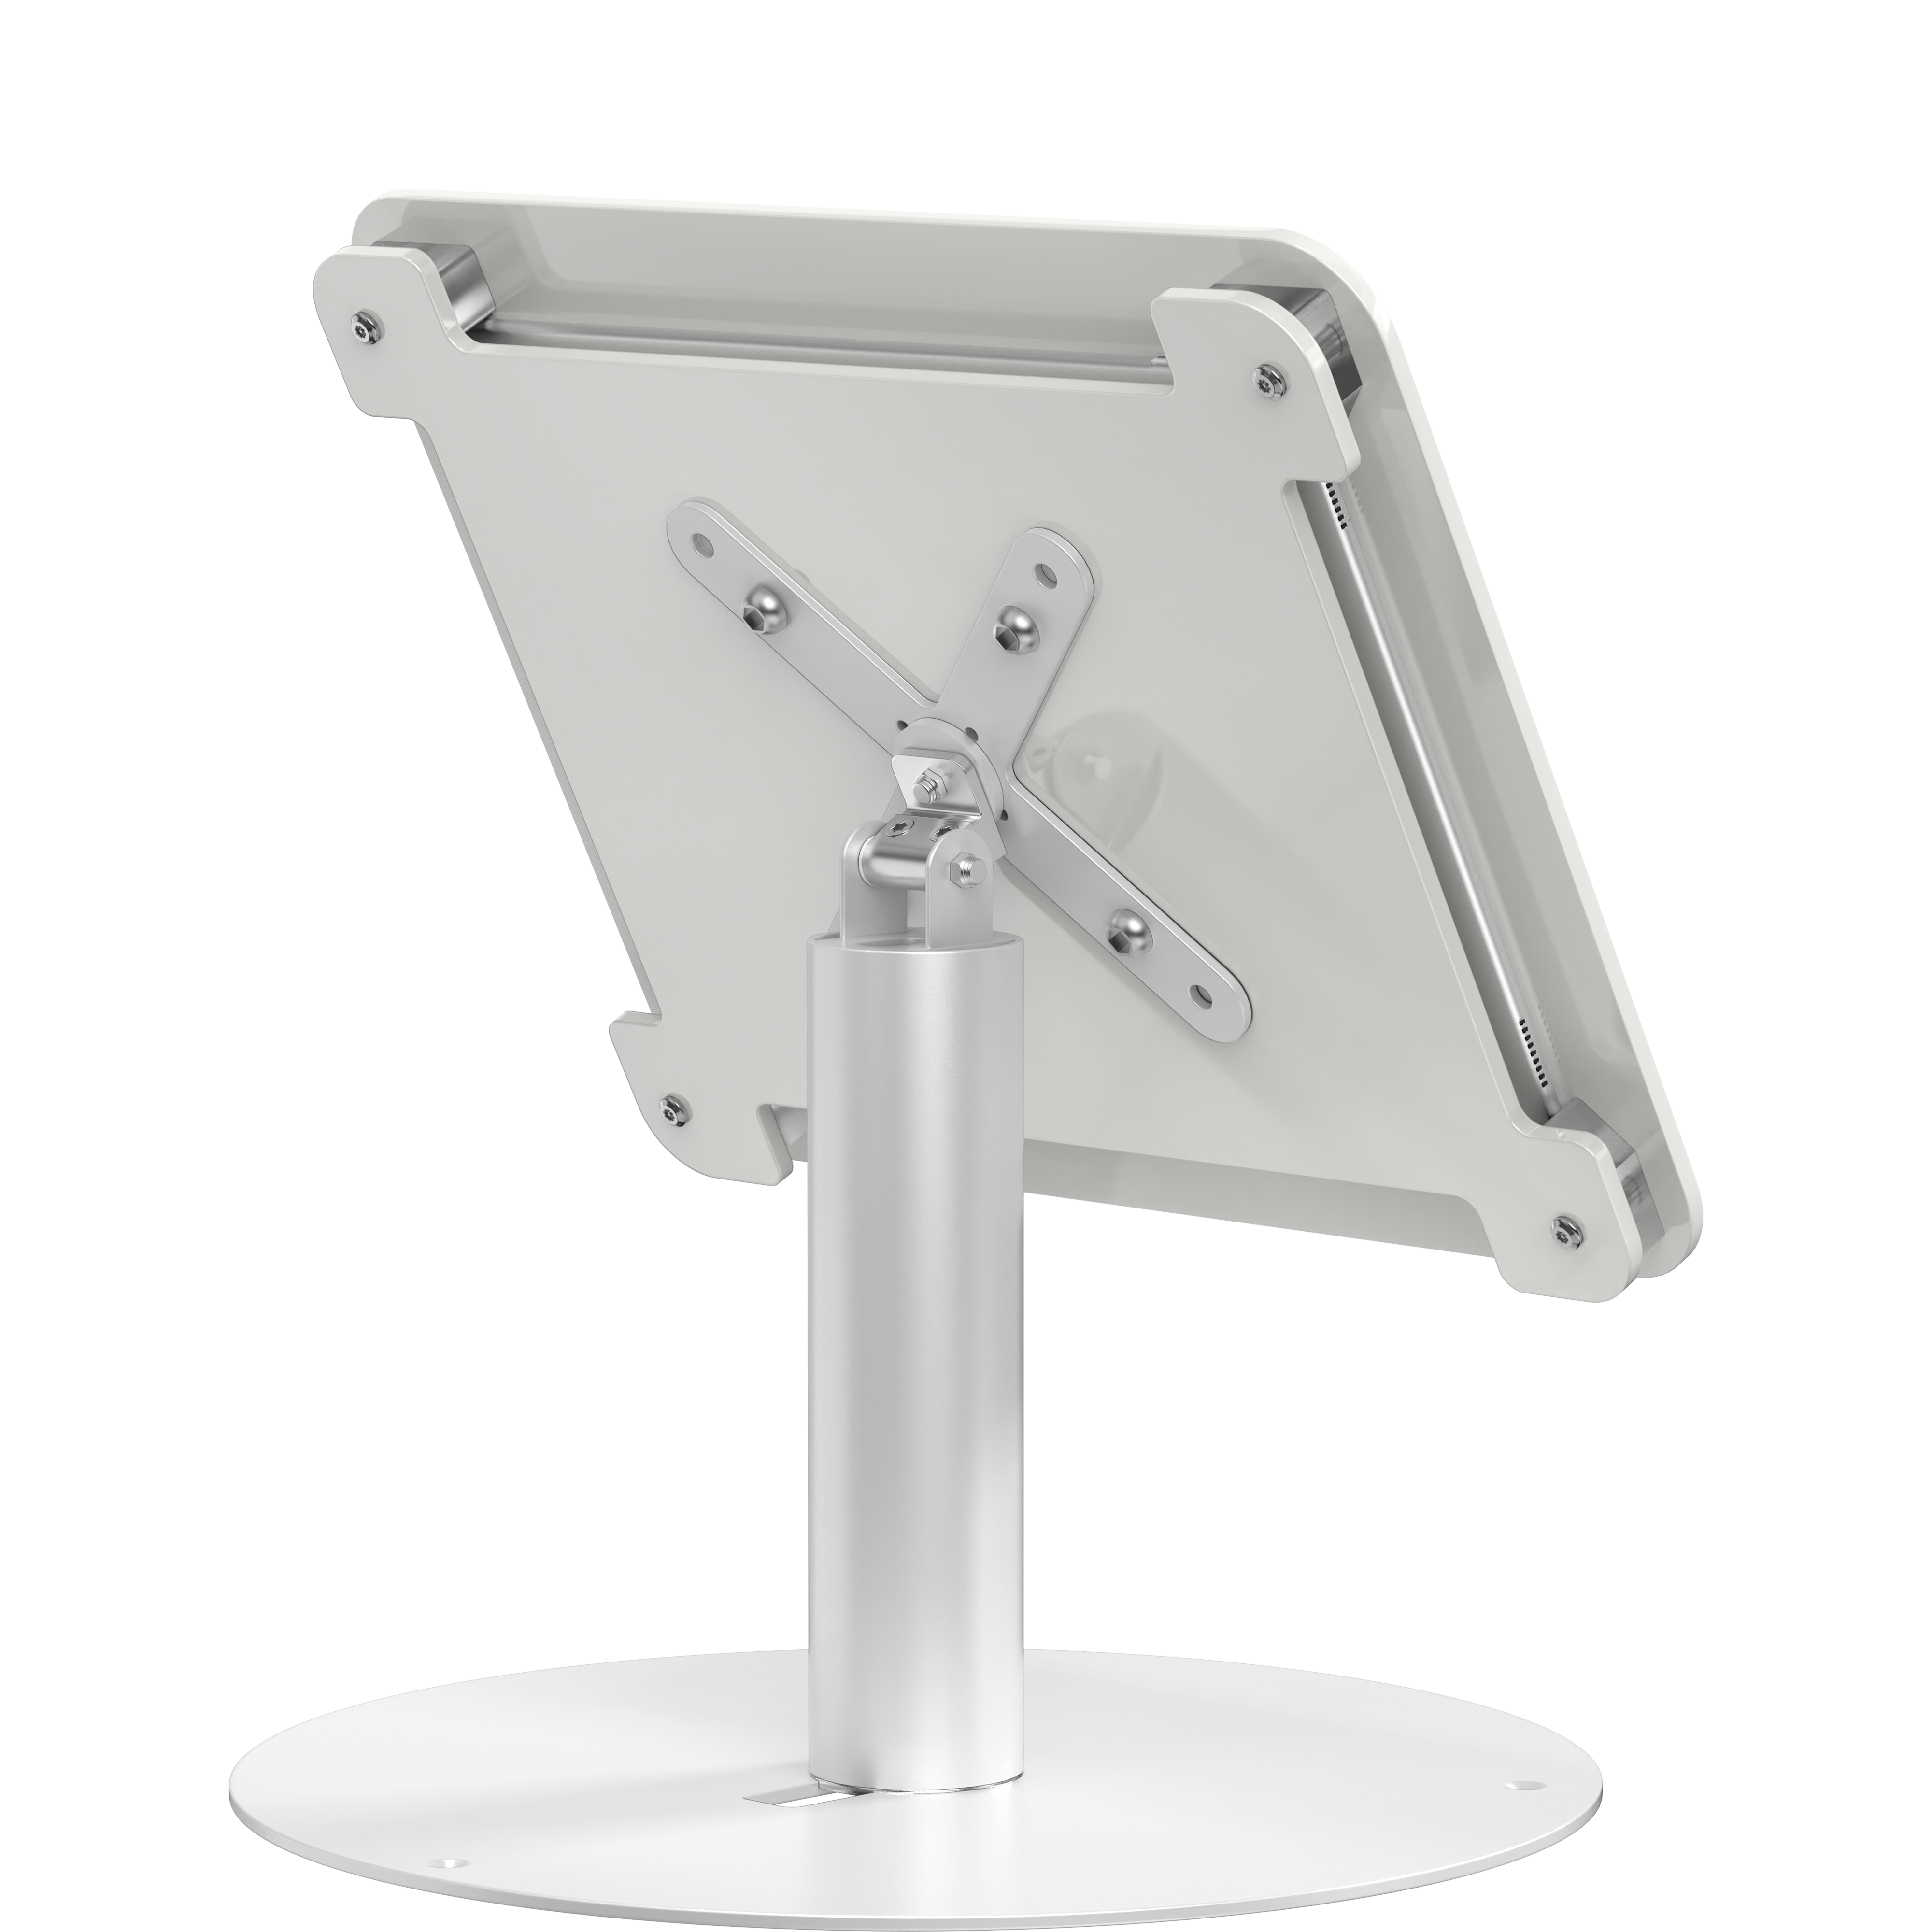 Rotating Desk Mount with Acrylic Security VESA Enclosure for iPad 10.2” Series, iPad Air 3 and iPad Pro 10.5”